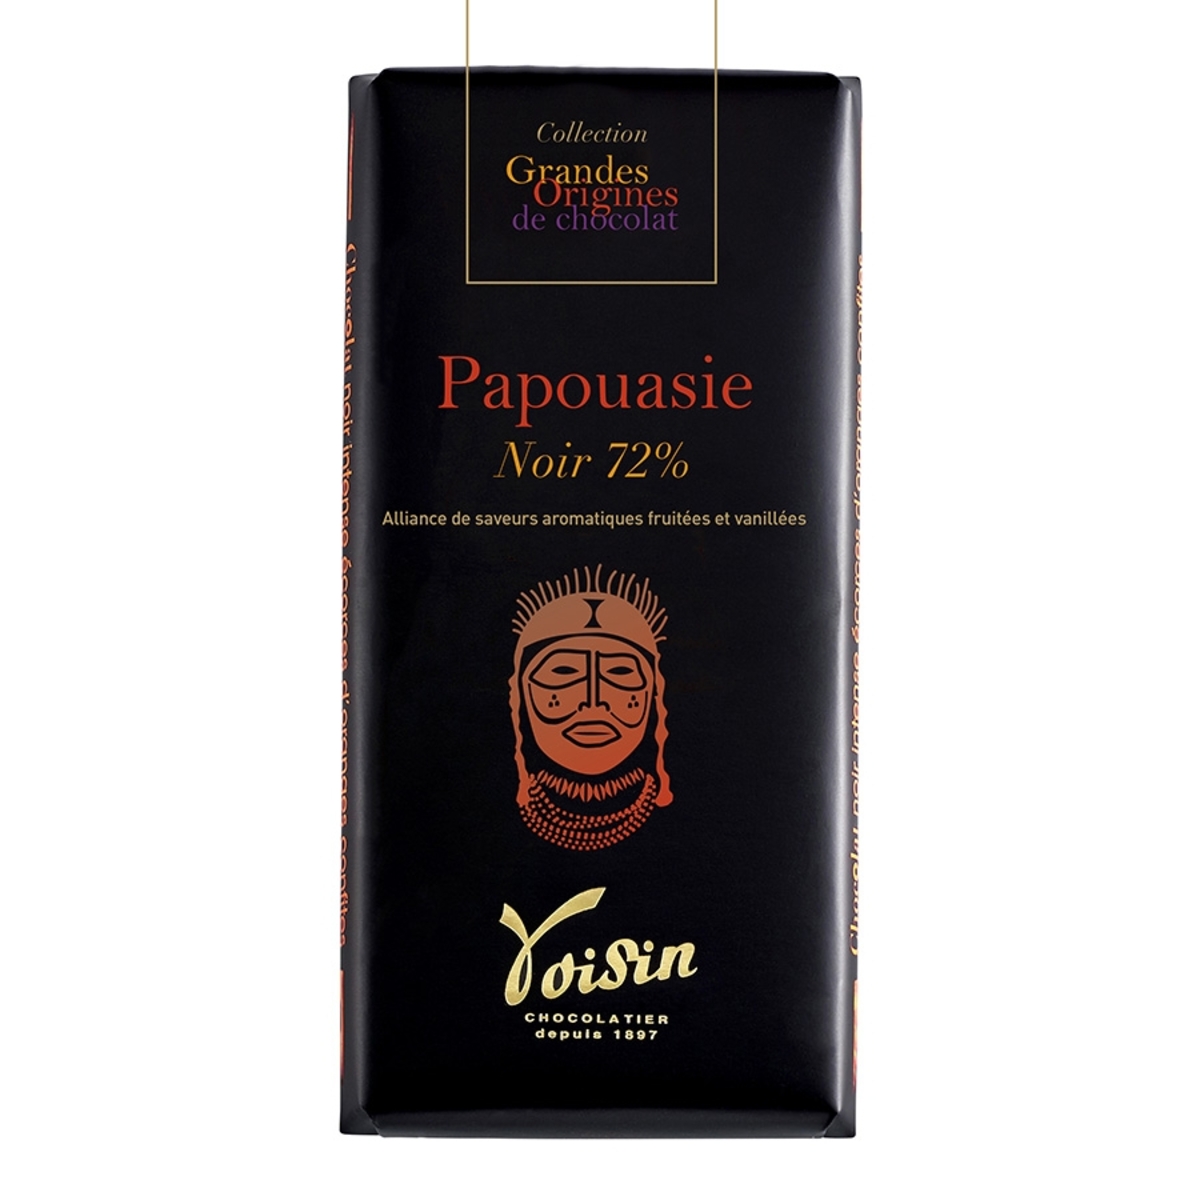 Tablette chocolat grand cru Papouasie Voisin 100g